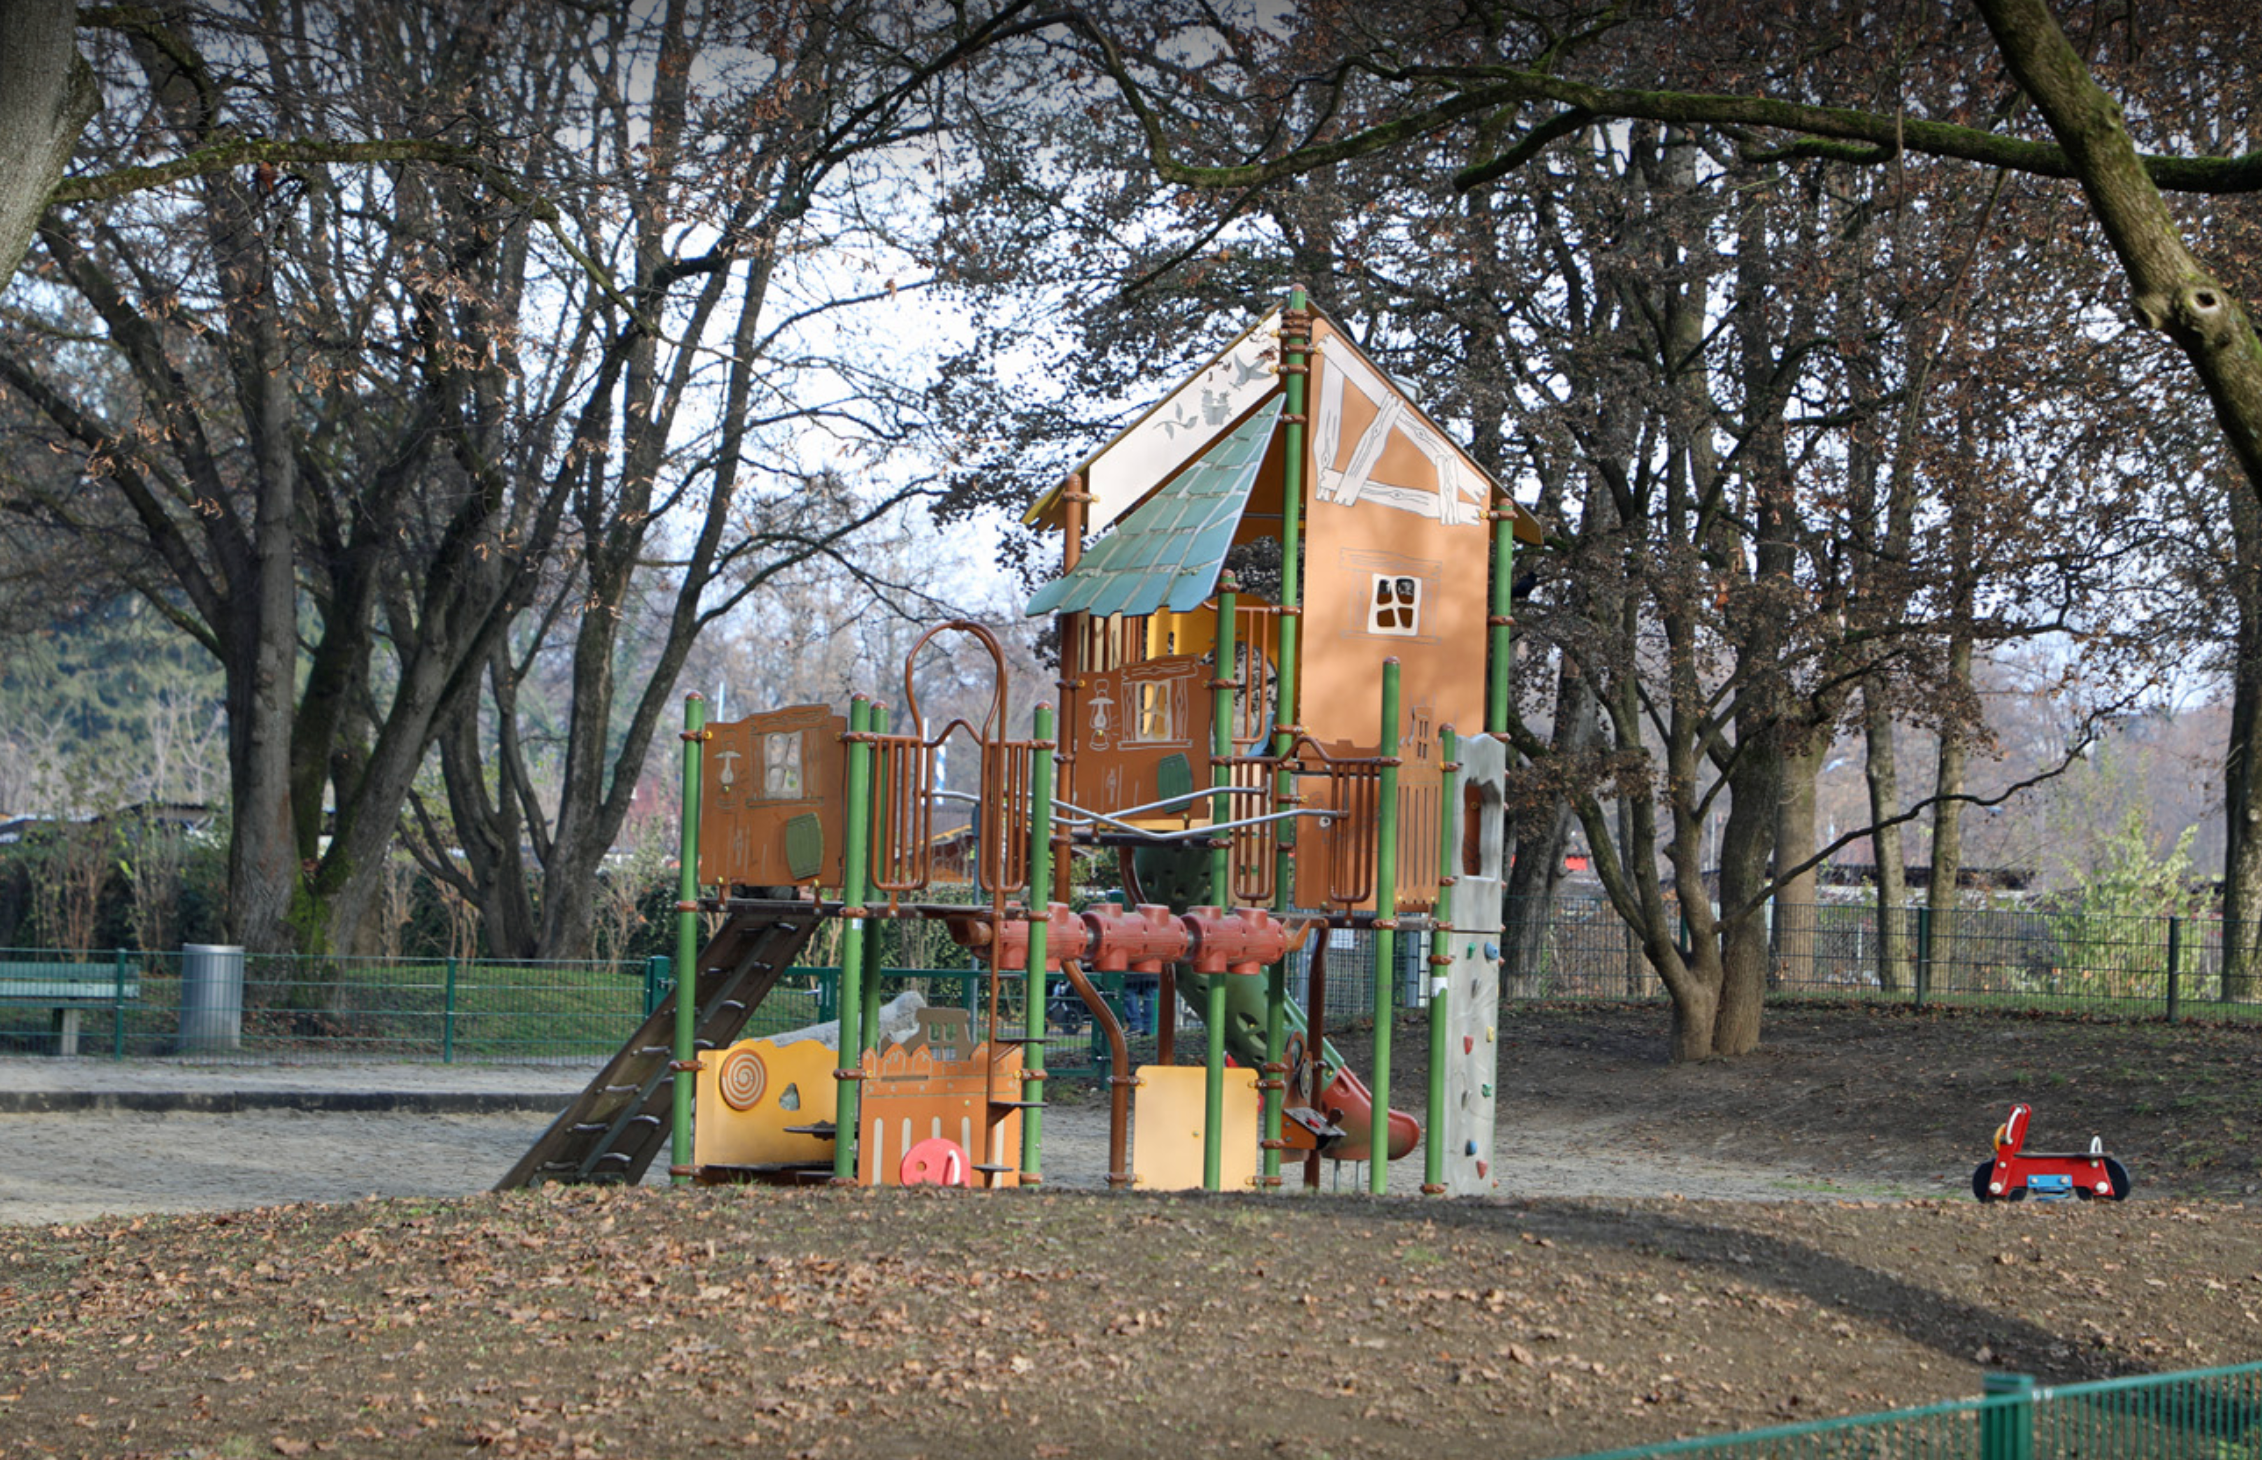 Kinderspielplatz Luitpoldpark Krokodilfigur